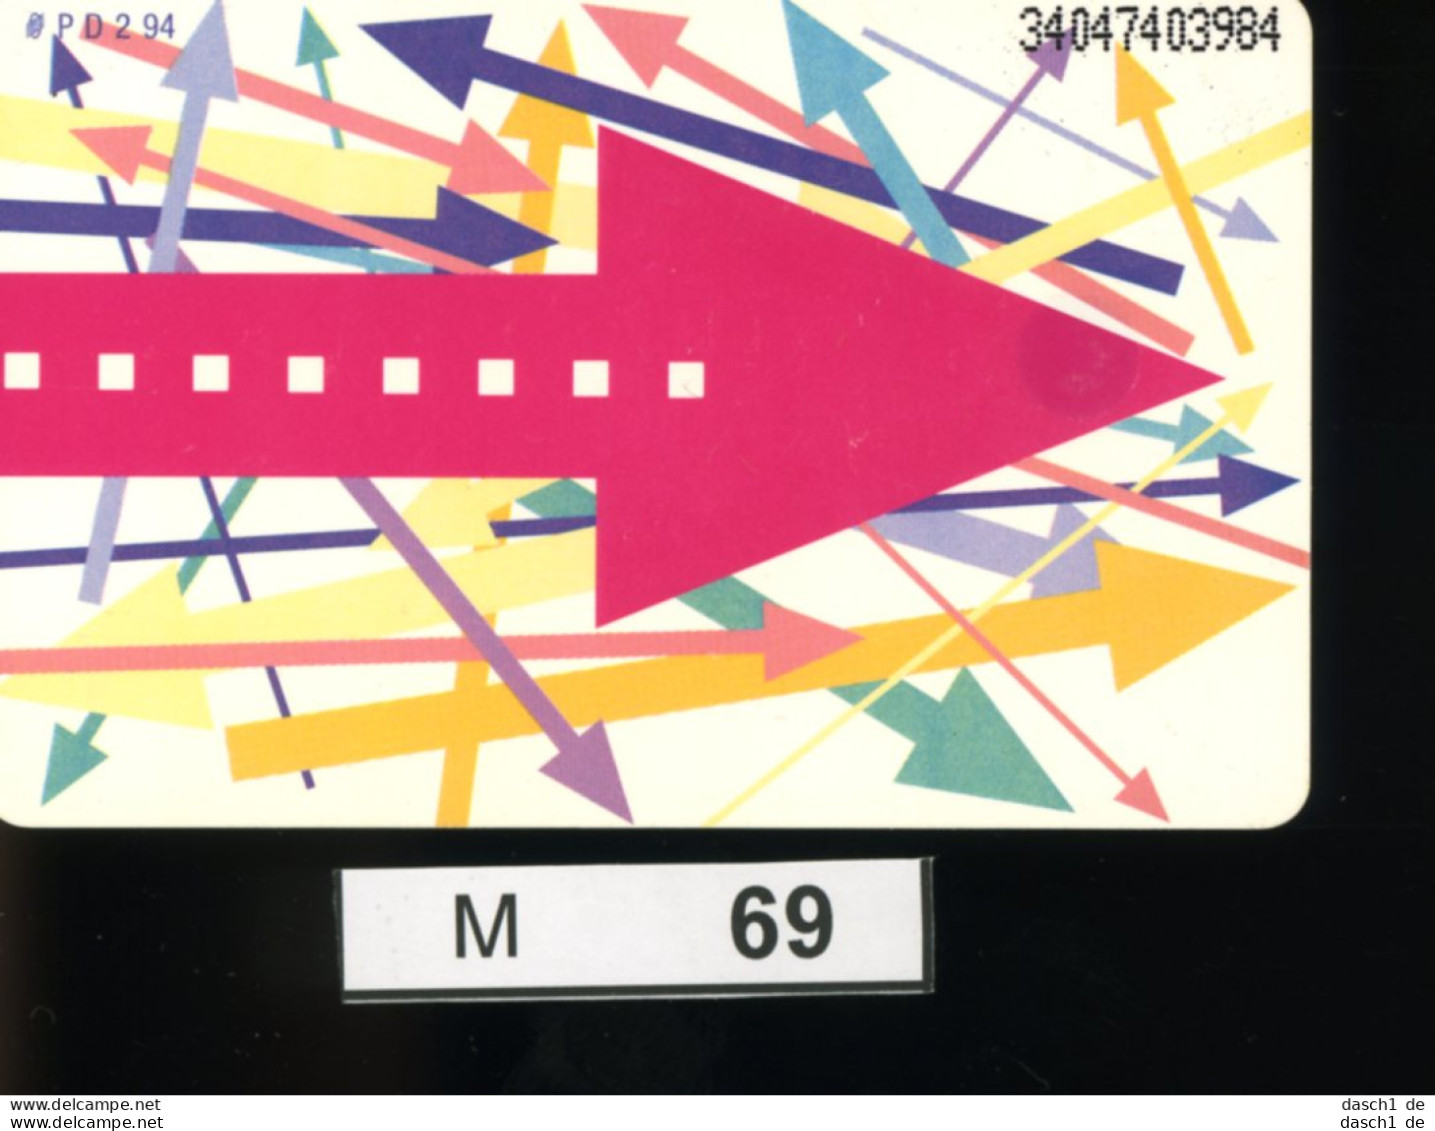 M069, Deutschland, TK, Standardkarte Telekom, 12 DM, 1994 - P & PD-Series : D. Telekom Till